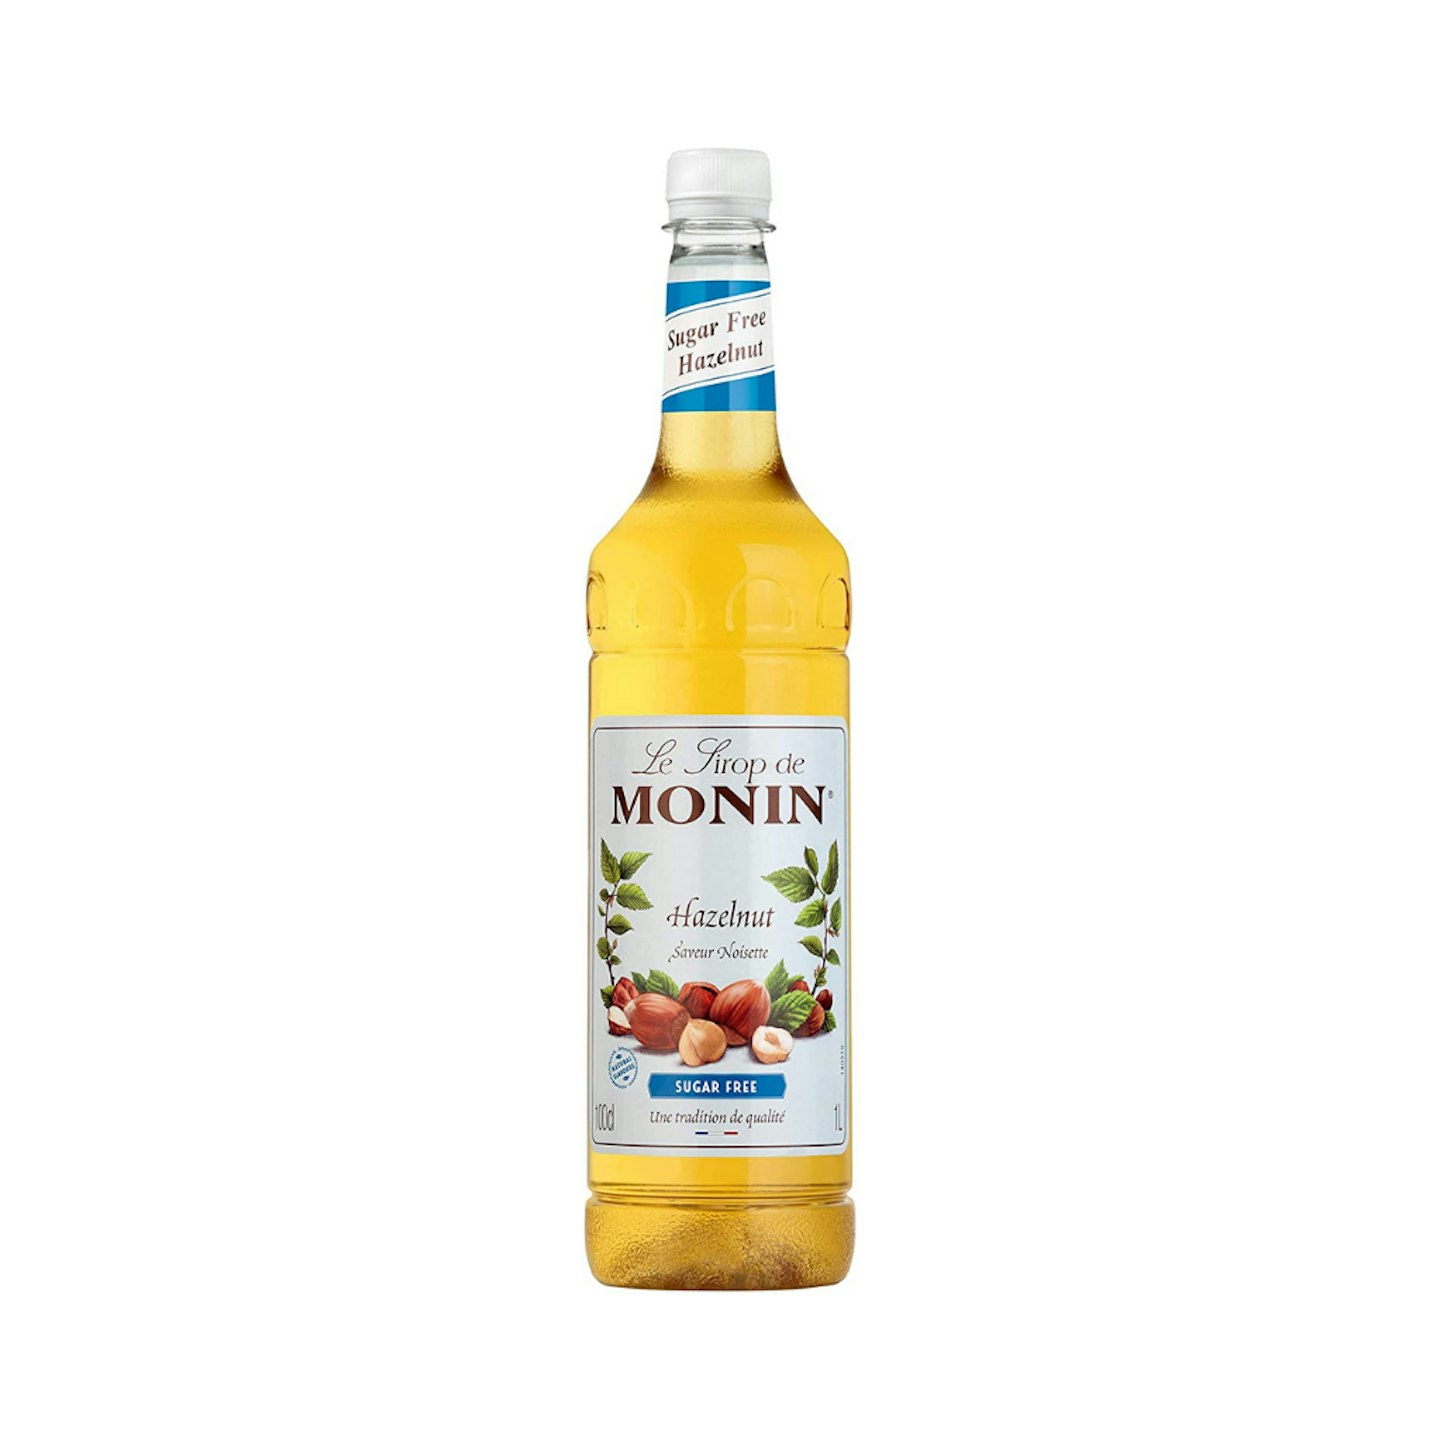 MONIN Premium Hazelnut Sugar Free Syrup 1 L